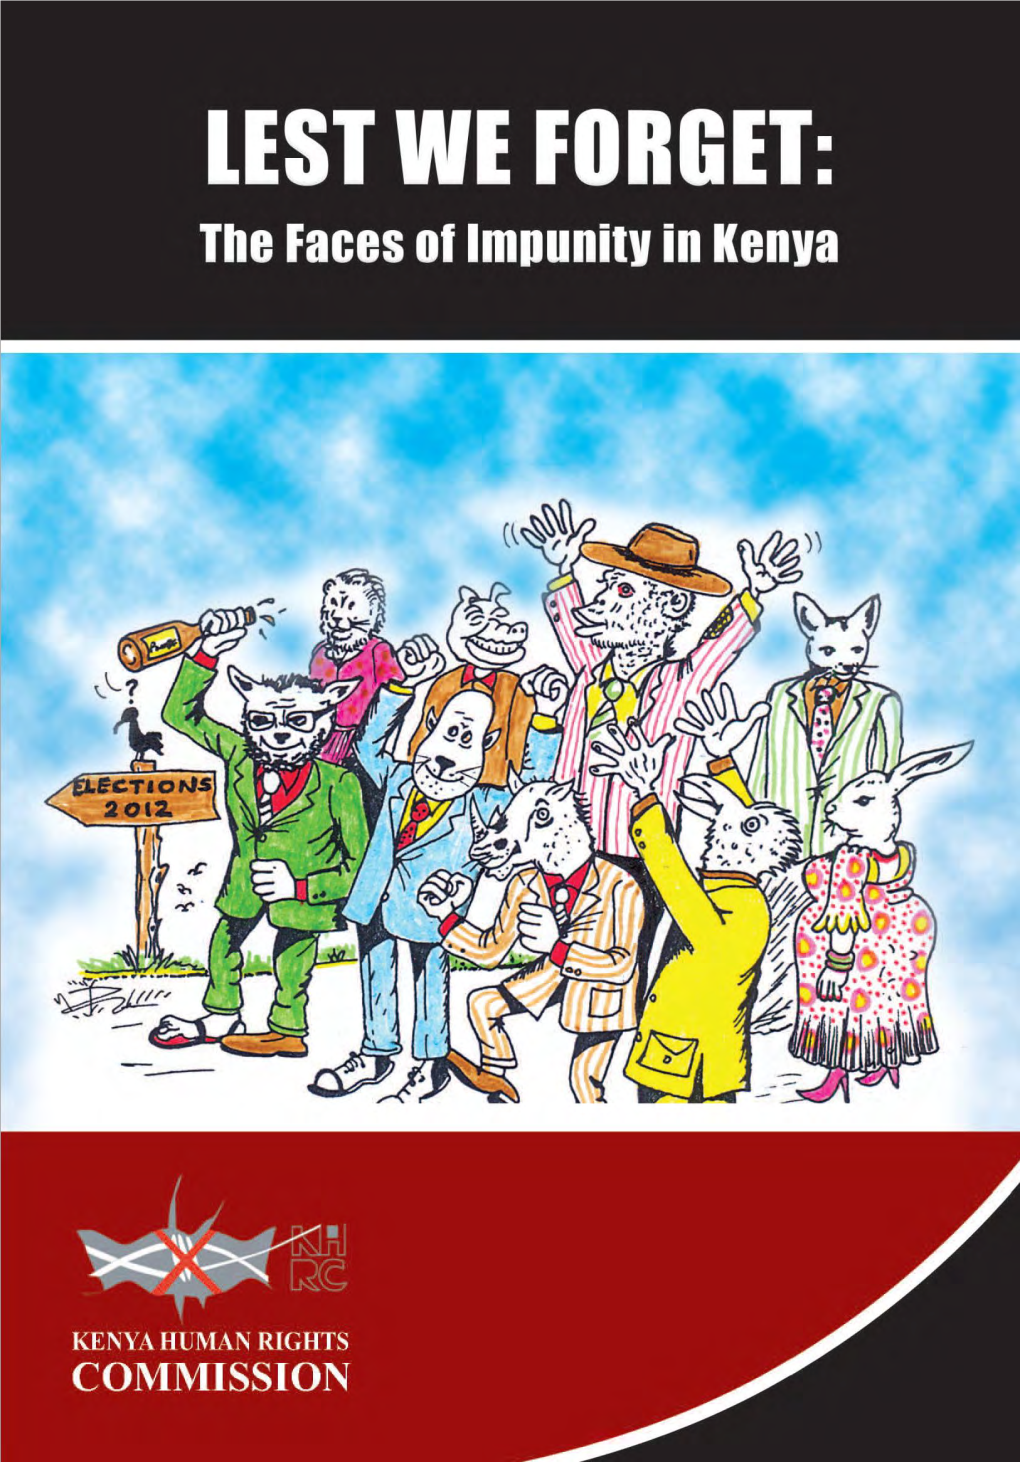 The Faces of Impunity in Kenya